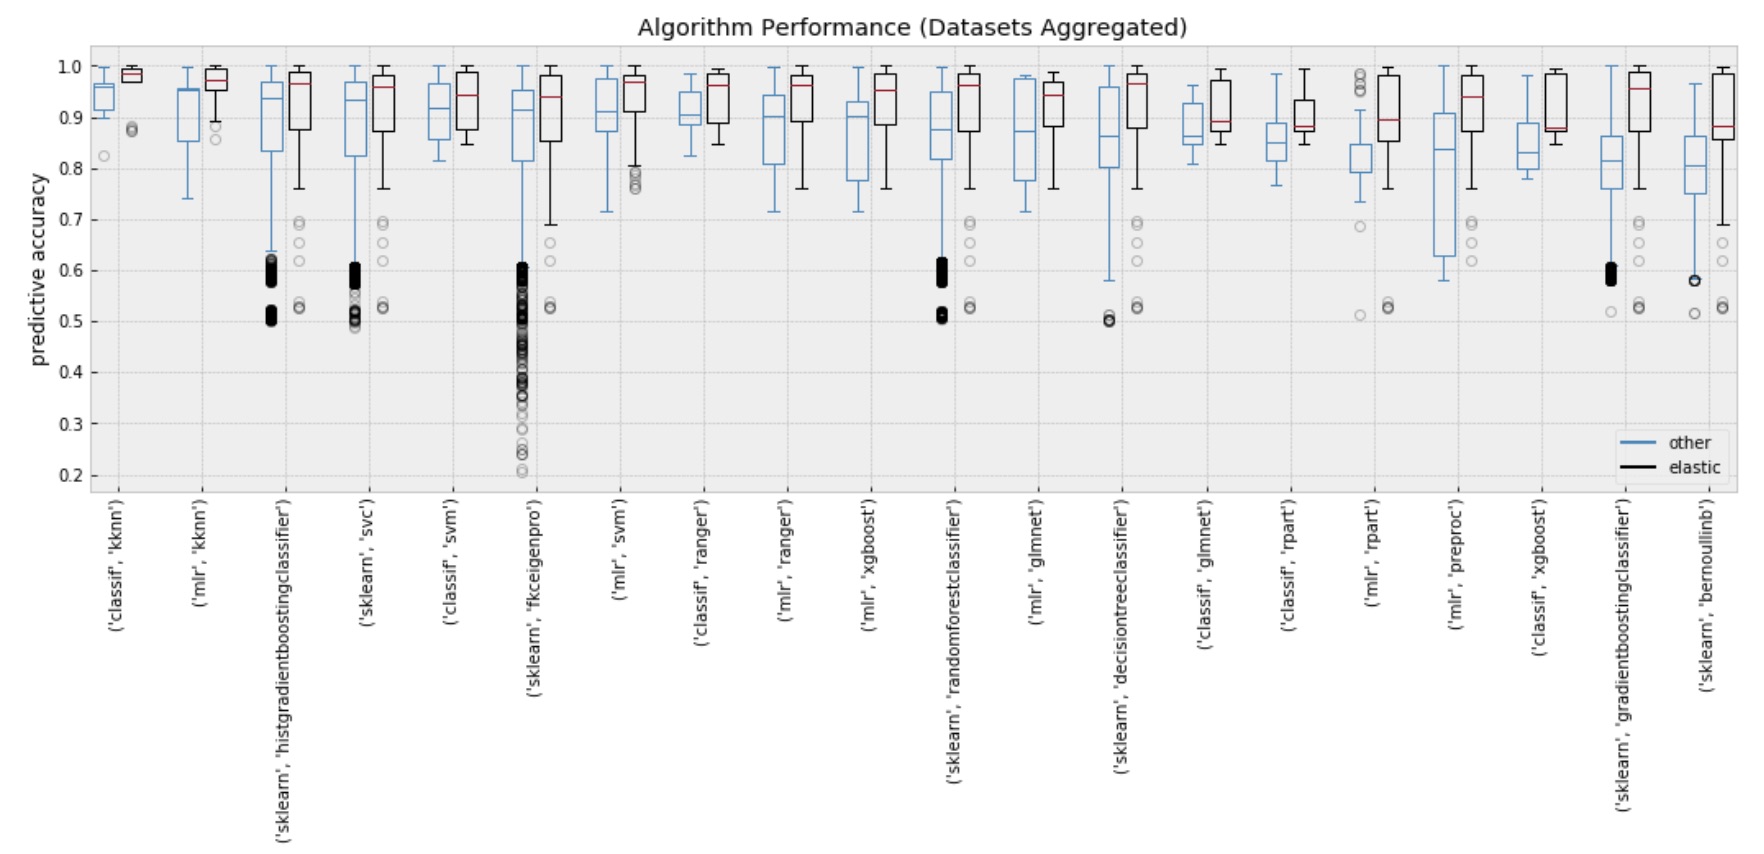 Algorithm performance